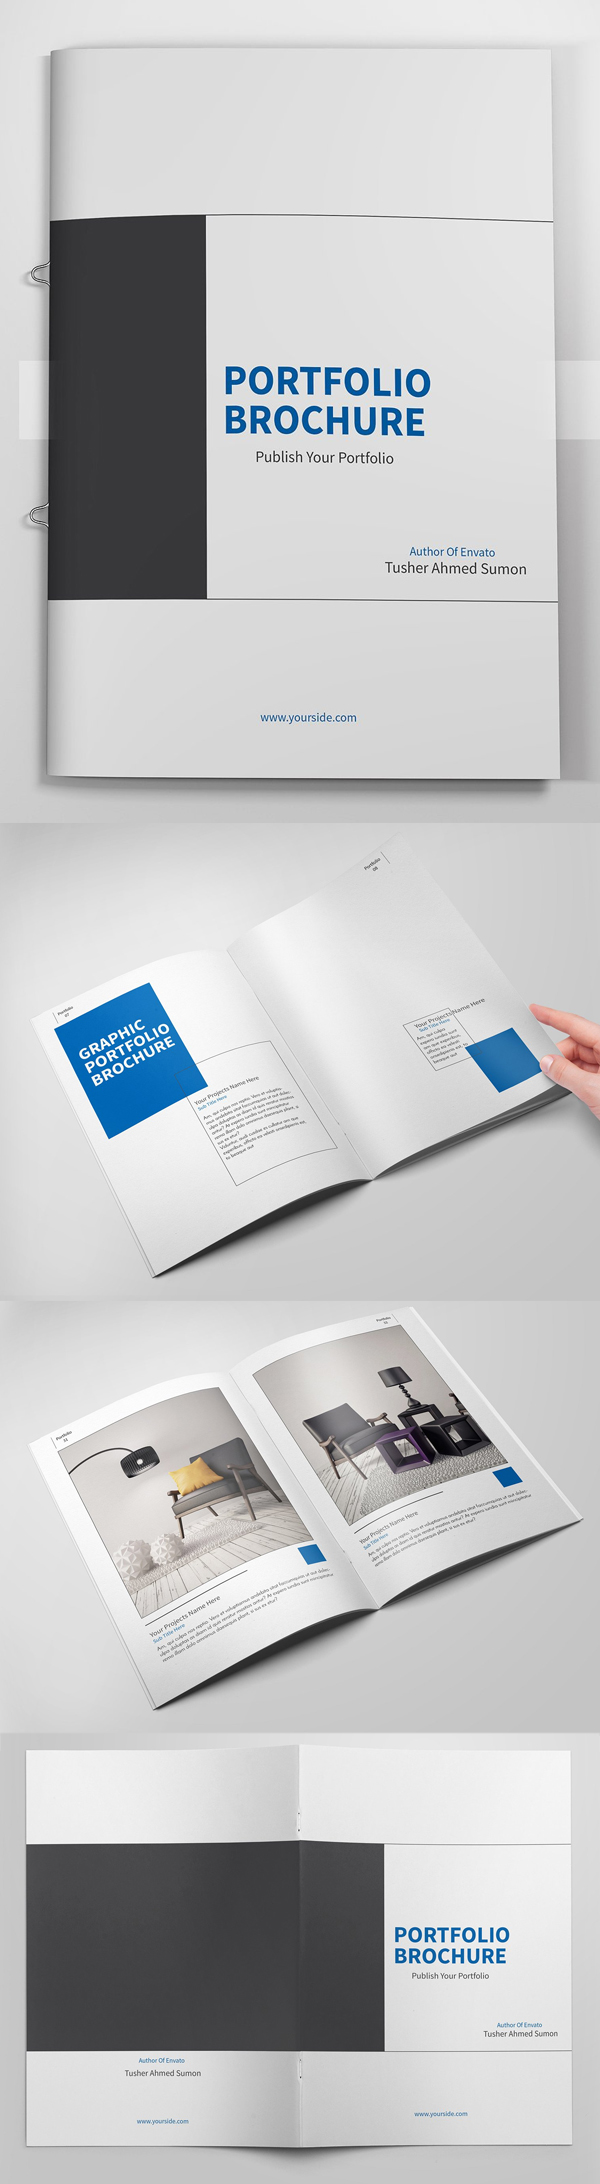 Portfolio Brochures Template Design